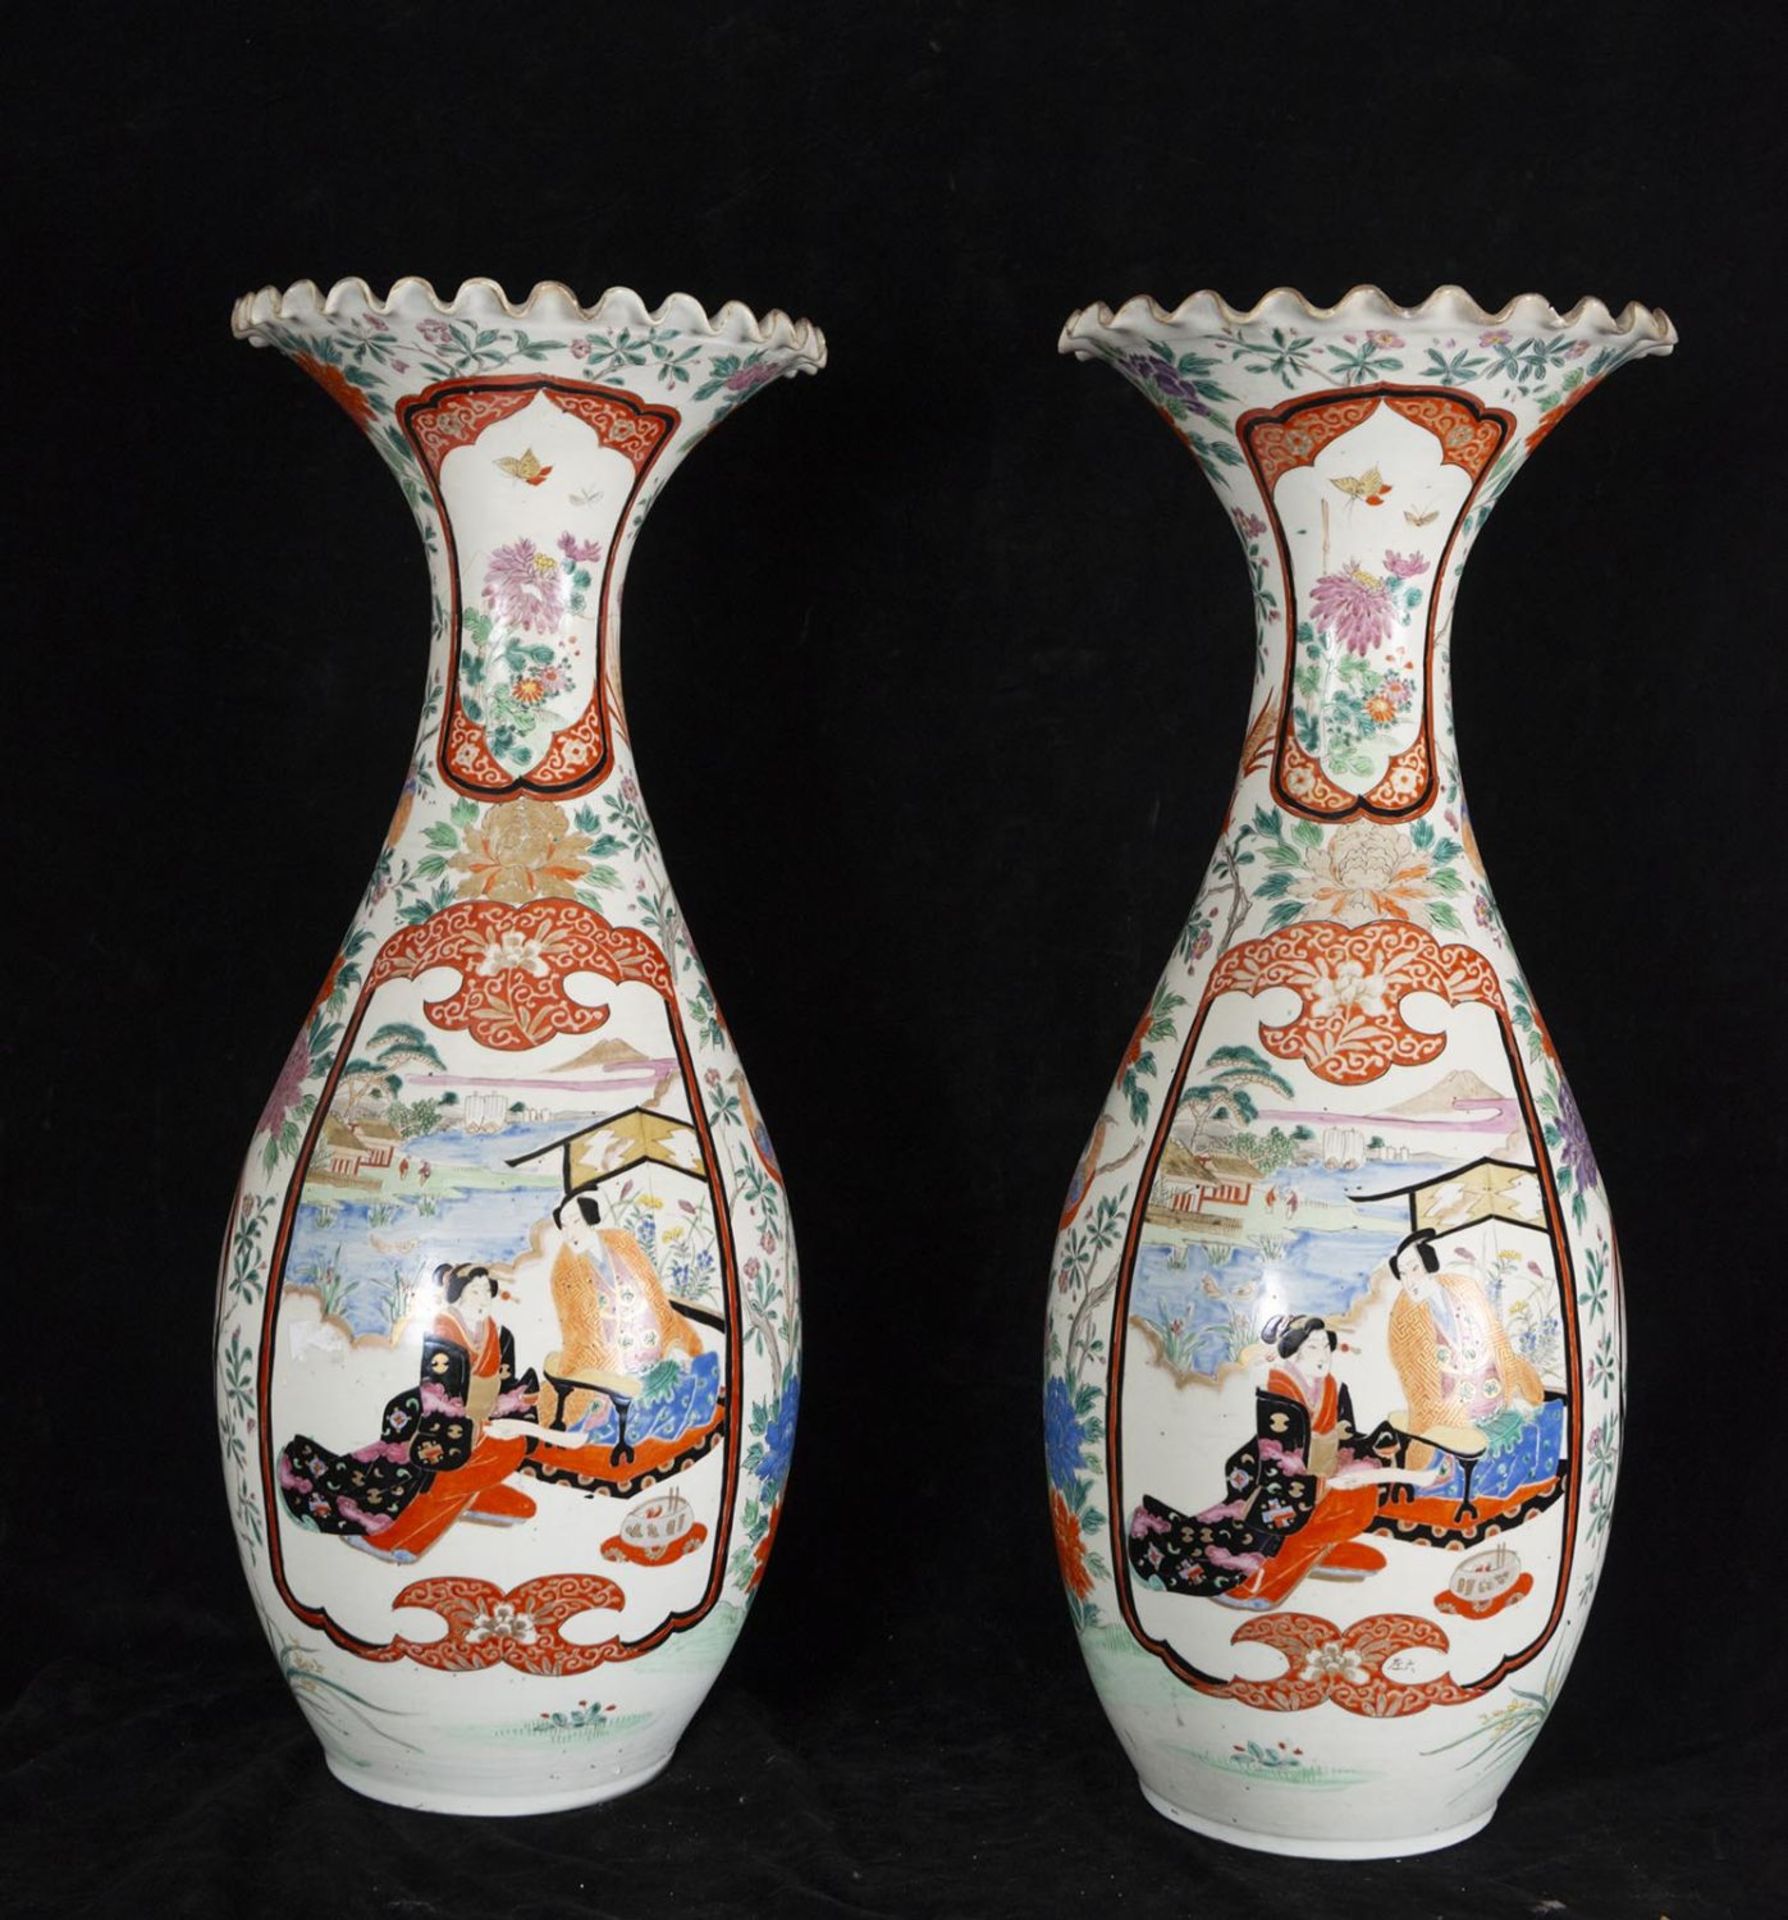 Pair of Large Polychrome Satsuma Vases, late Edo period, 19th century